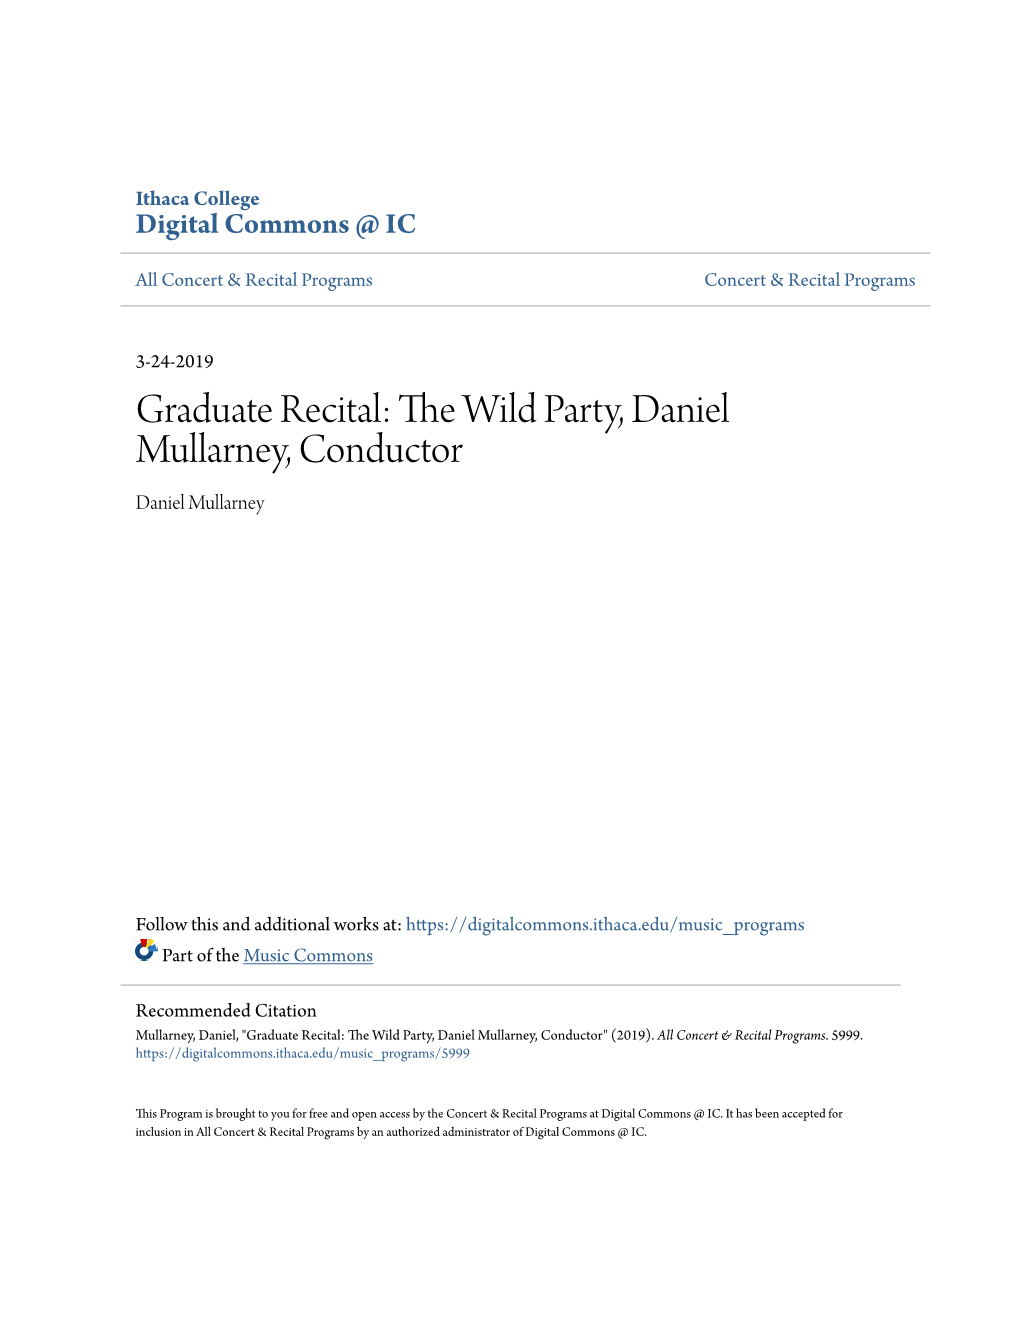 Graduate Recital: the Wild Party, Daniel Mullarney, Conductor